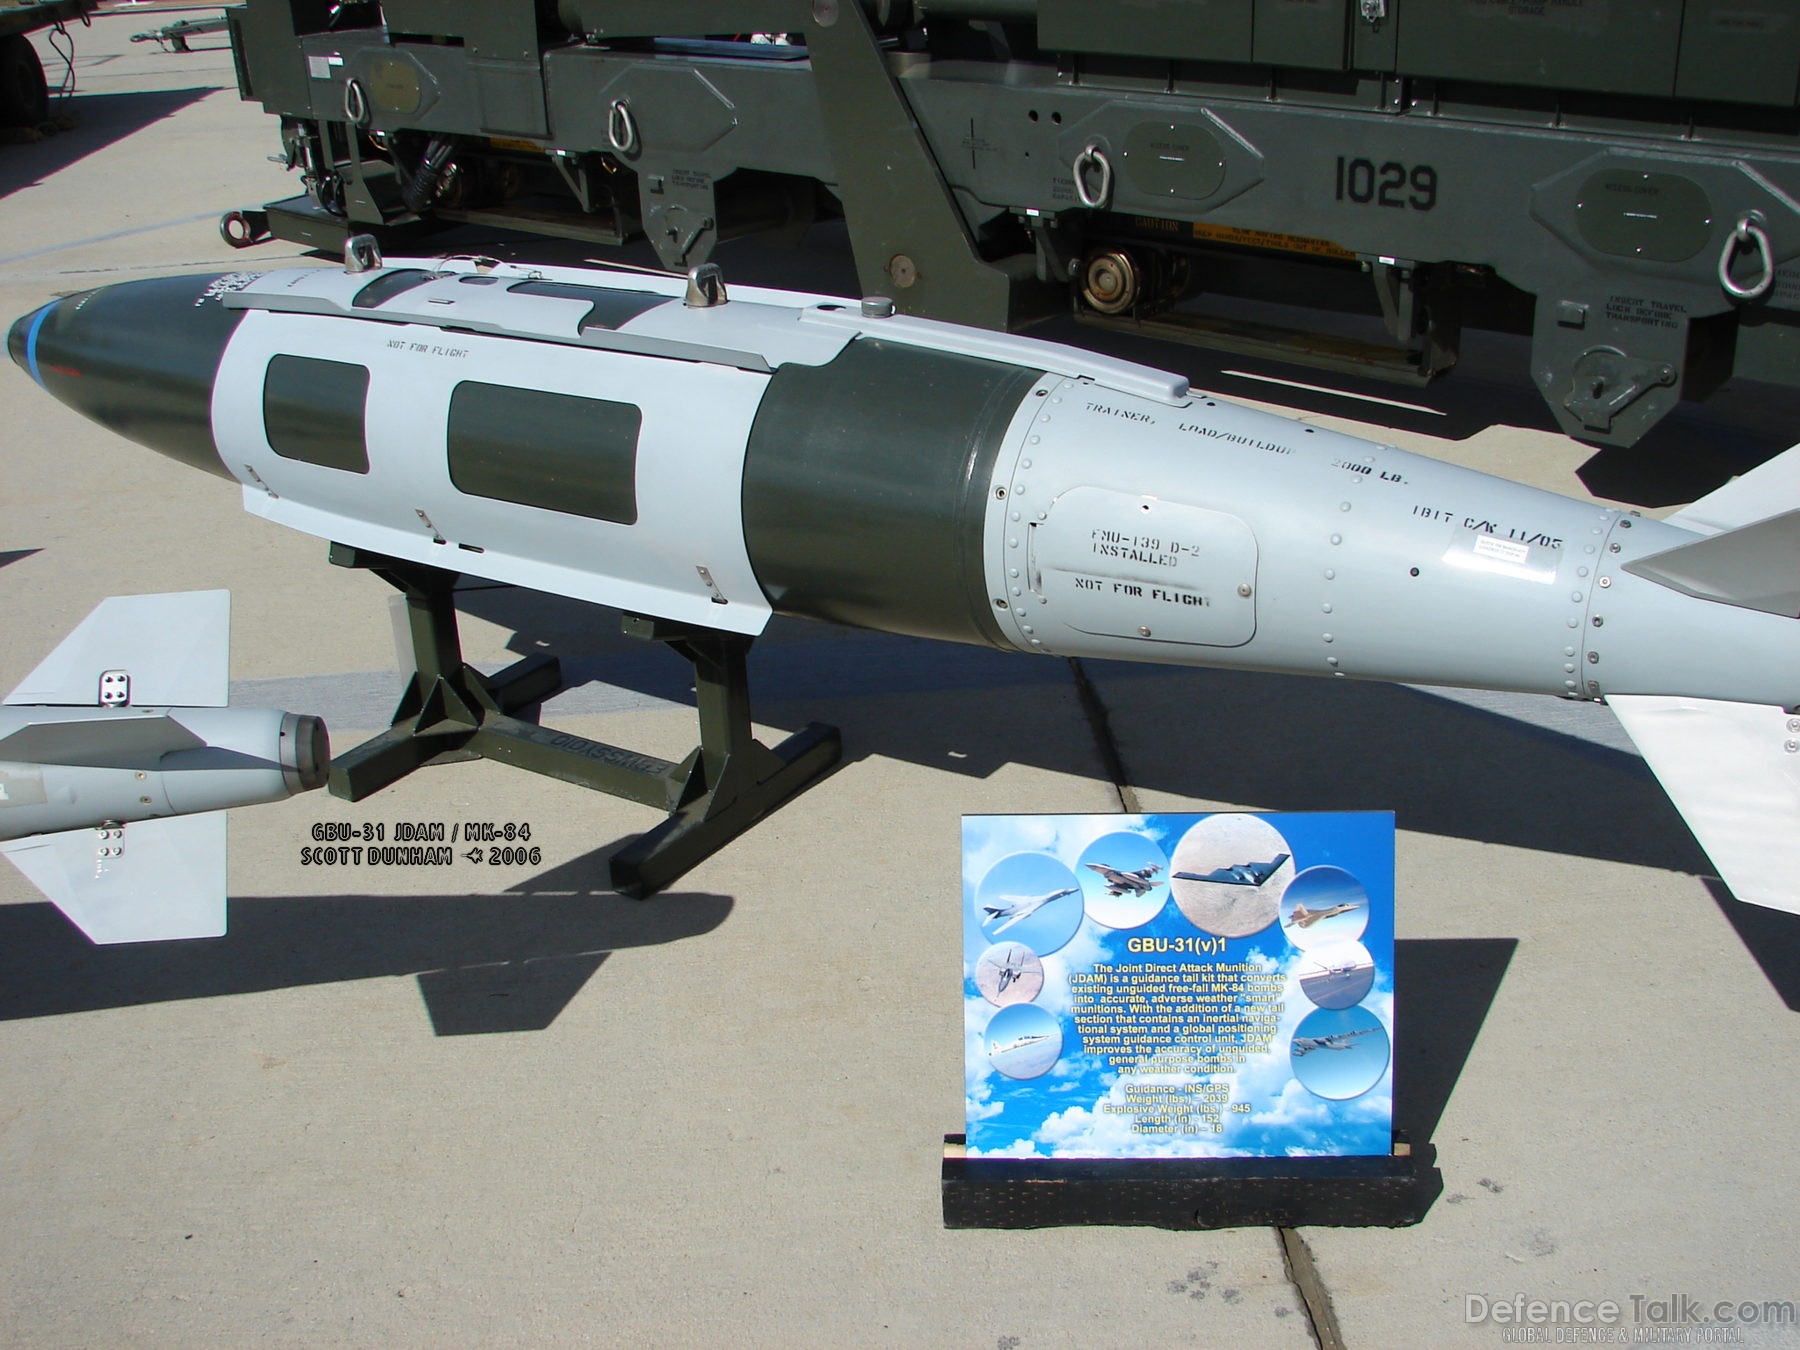 GBU-31 JDAM attached to MK-84 Bomb